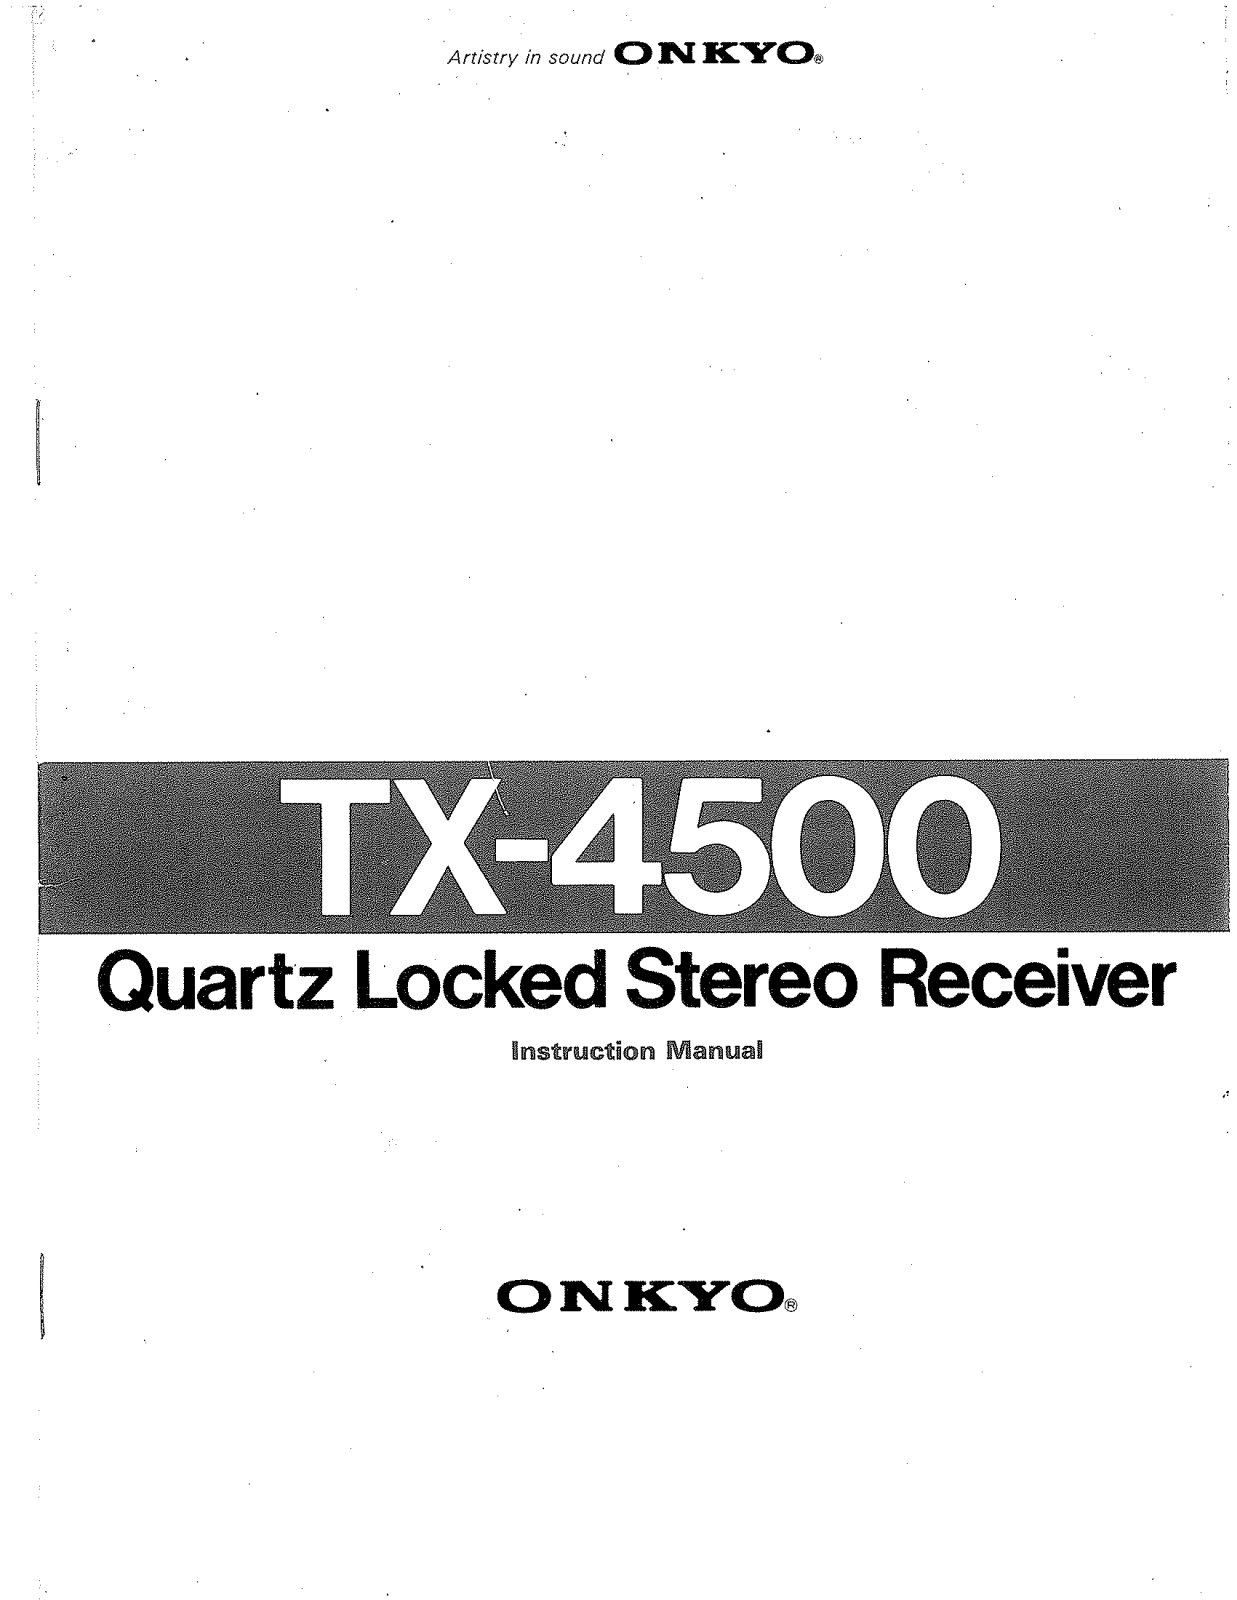 Onkyo TX-4500 Owners Manual